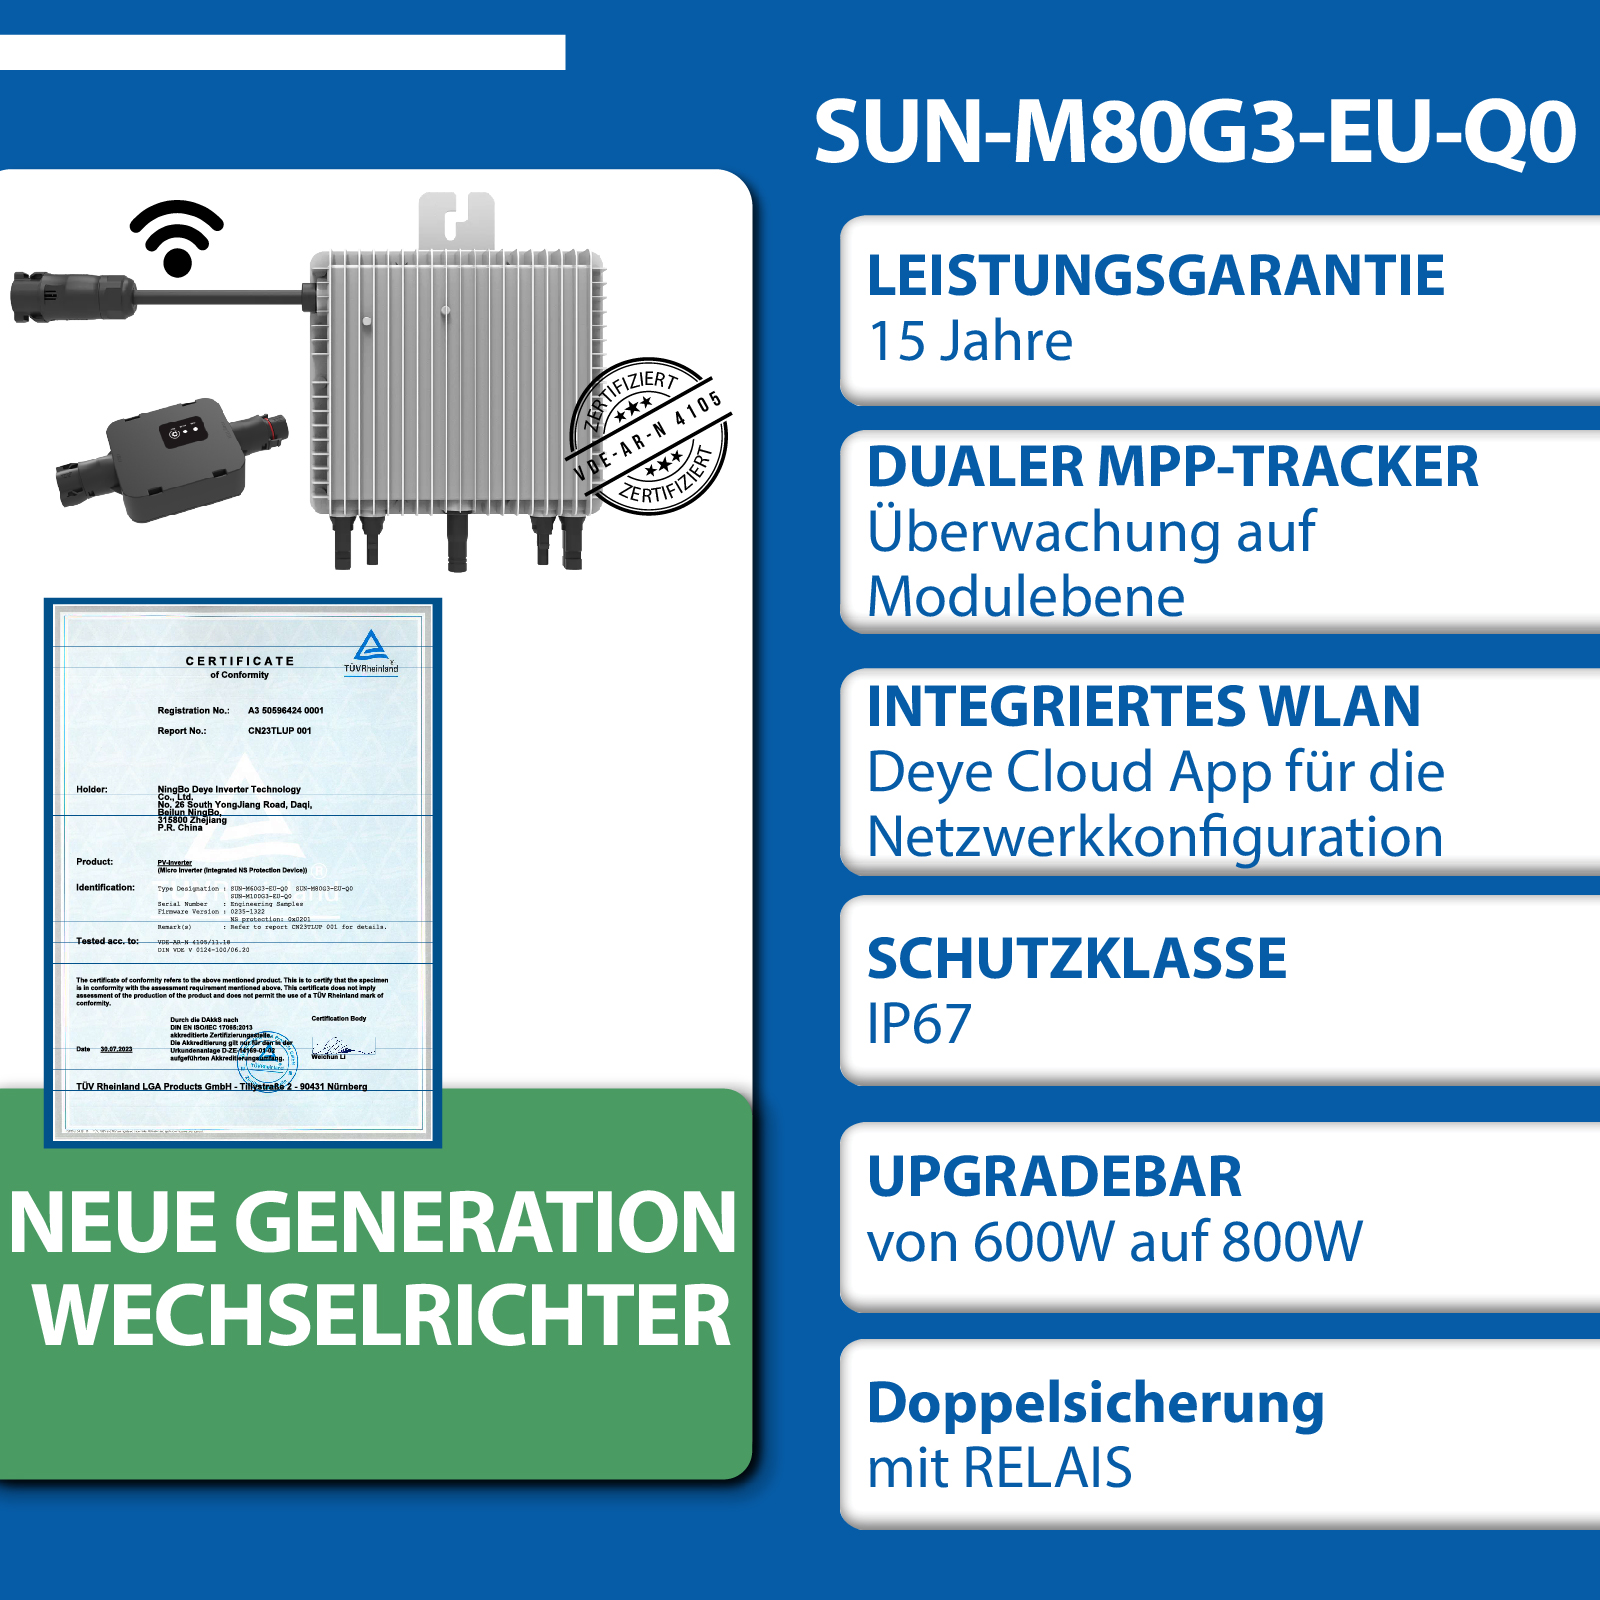 1000W Balkonkraftwerk Komplettset inkl. 500W Solarmodule, NEP 800W WIFI  Wechselrichter, Schuko Stecker - Enprove Solar GmbH